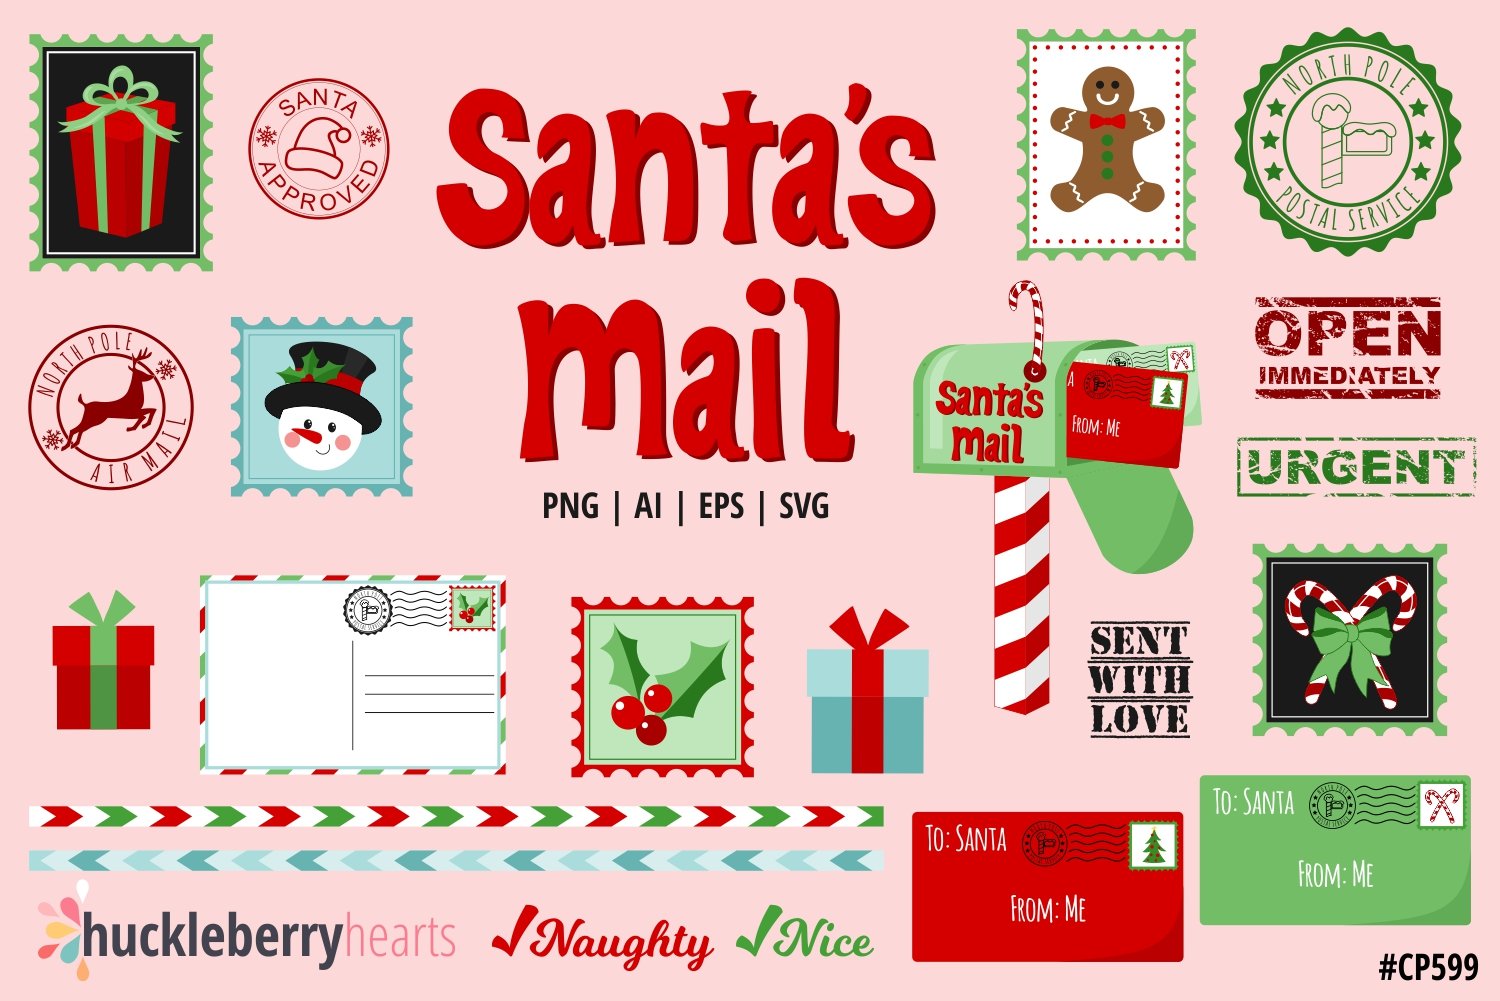 Santas Mail cover image.